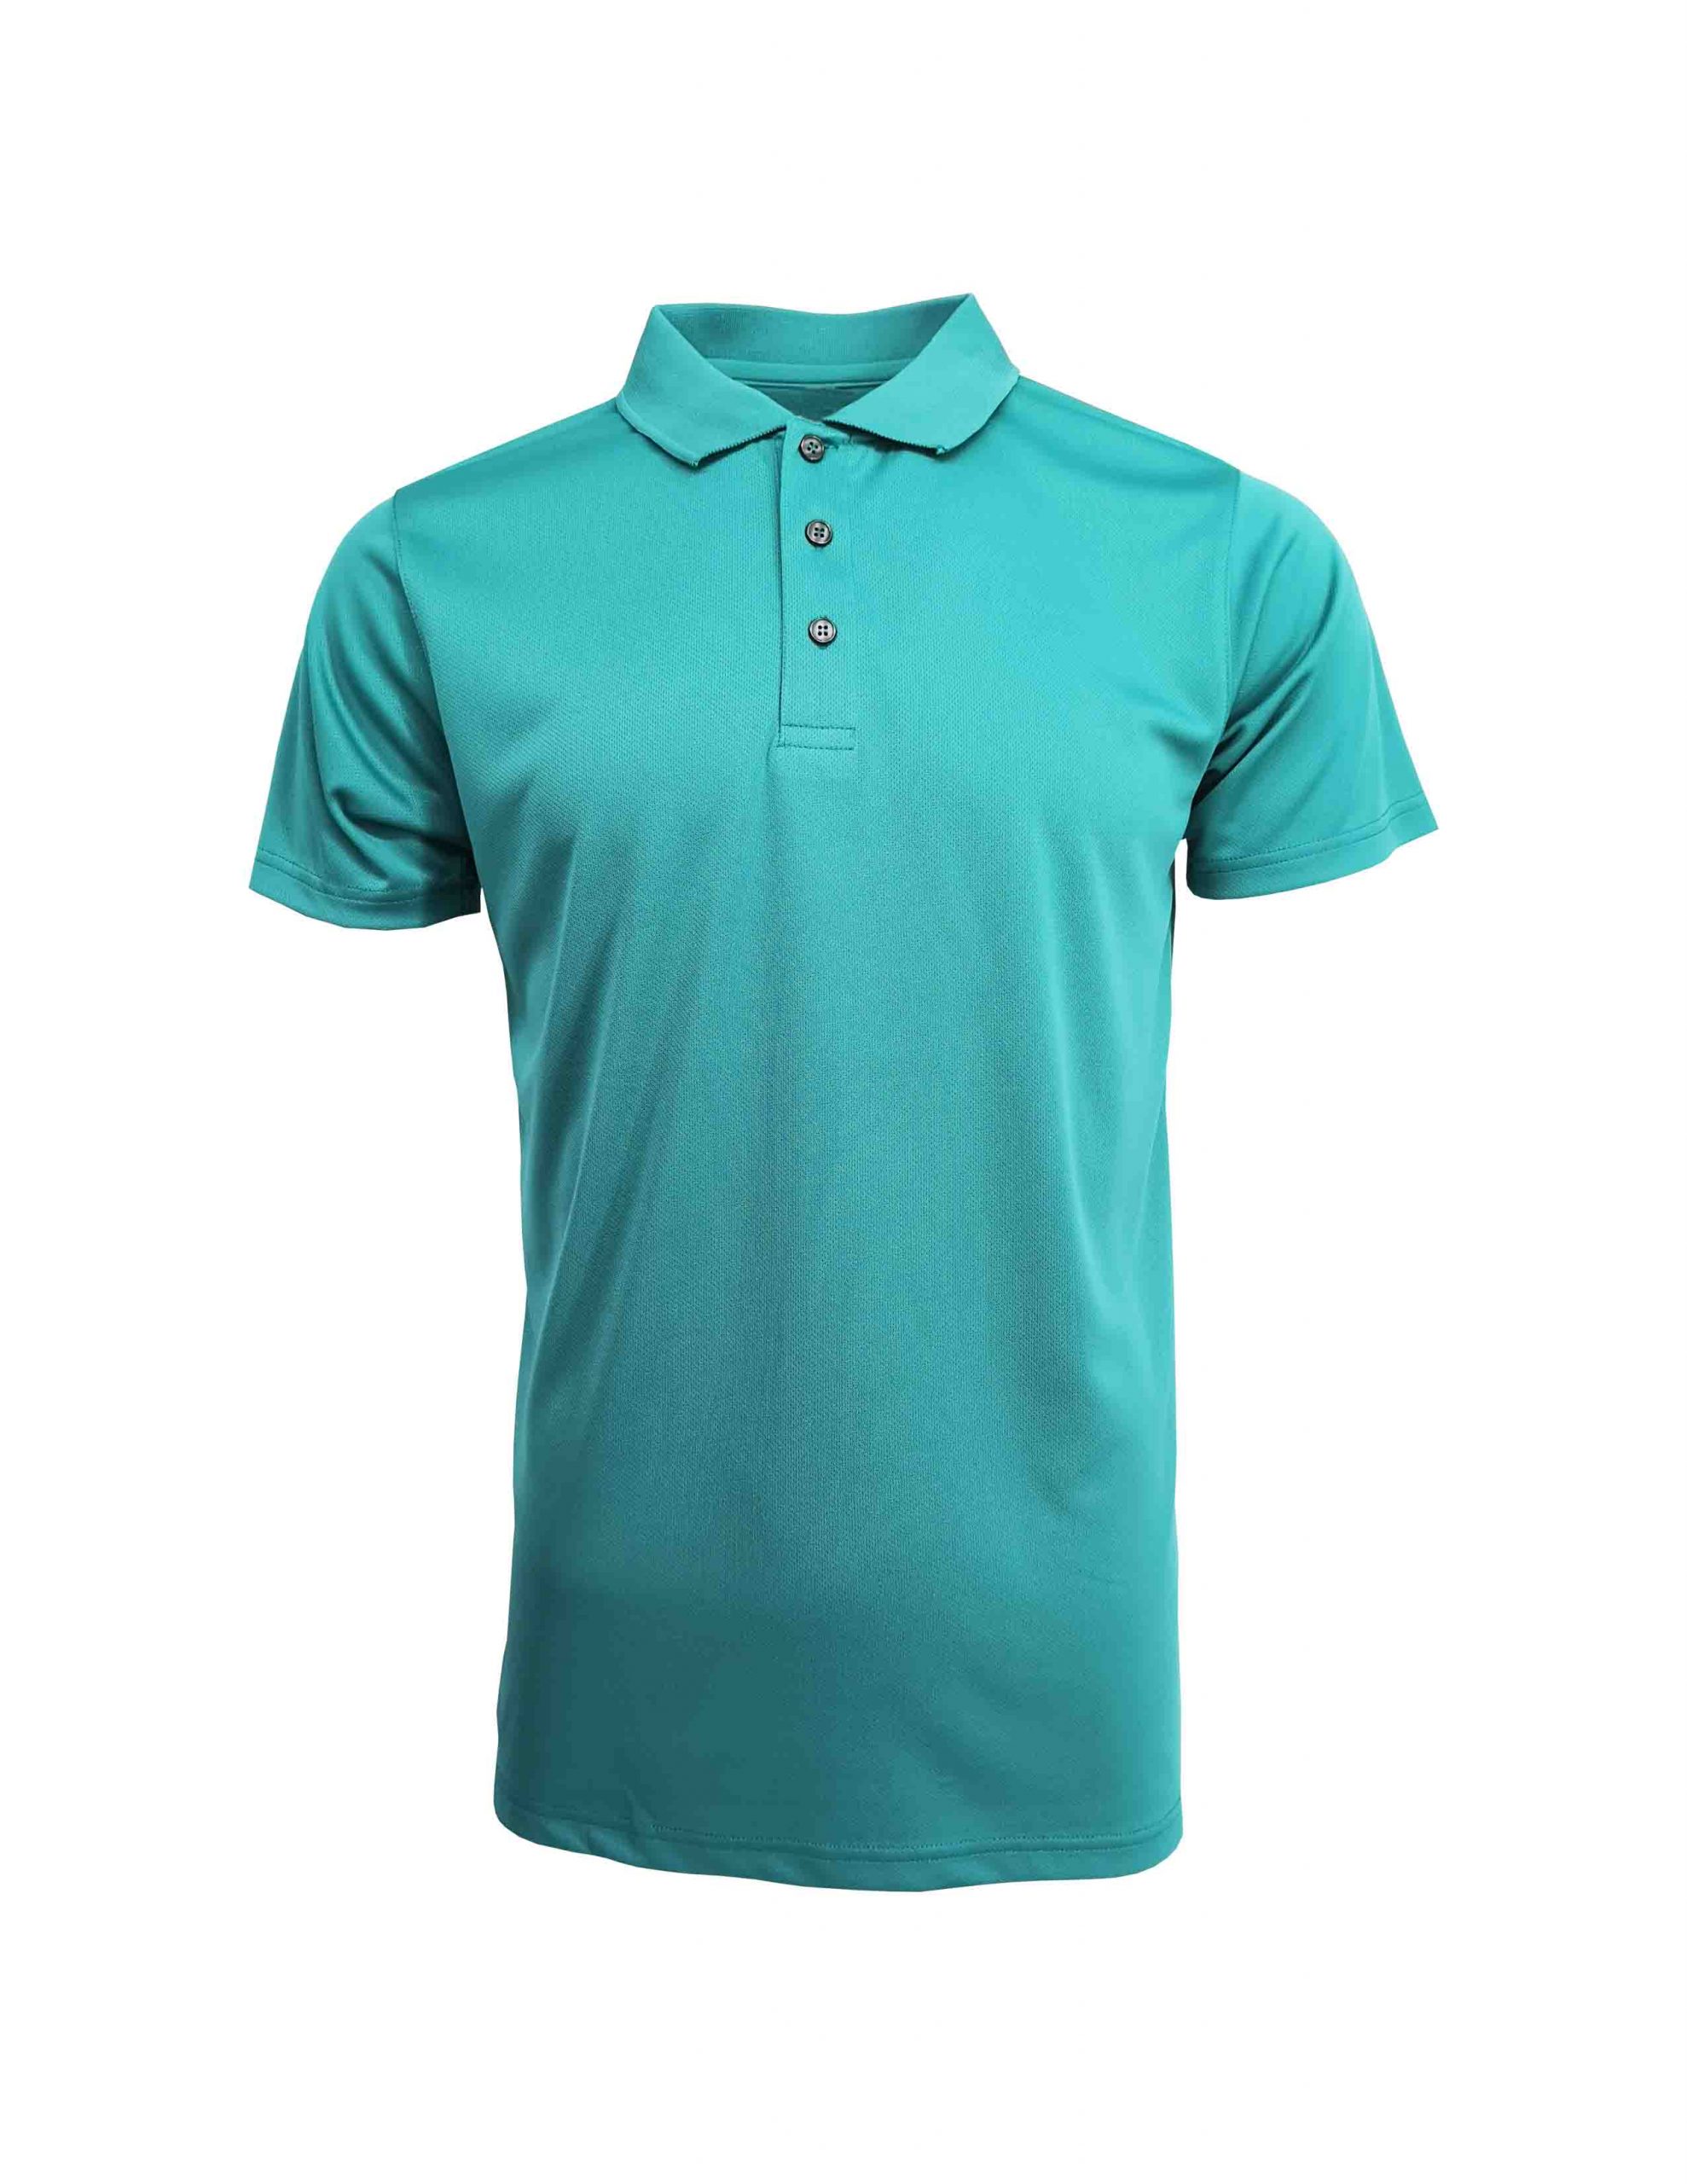 QDP 5306 Turquoise Green - Rightway Basic T-Shirt | Basic T-Shirt ...